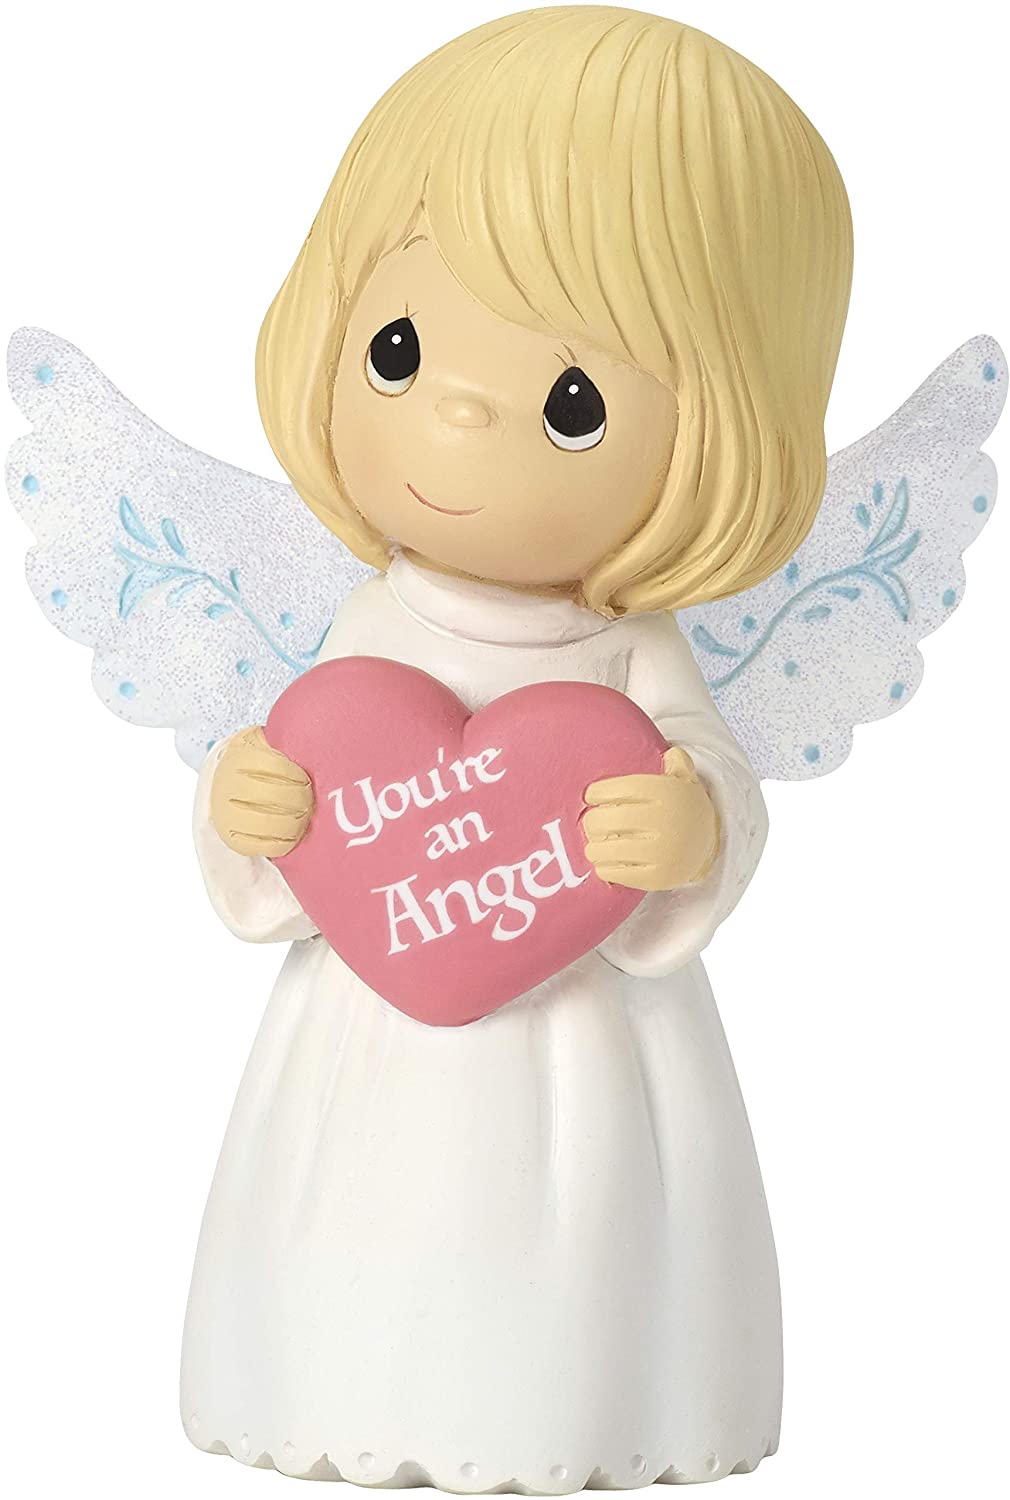 Precious Moments - You're an Angel - Resin mini Figurine - Royal Gift